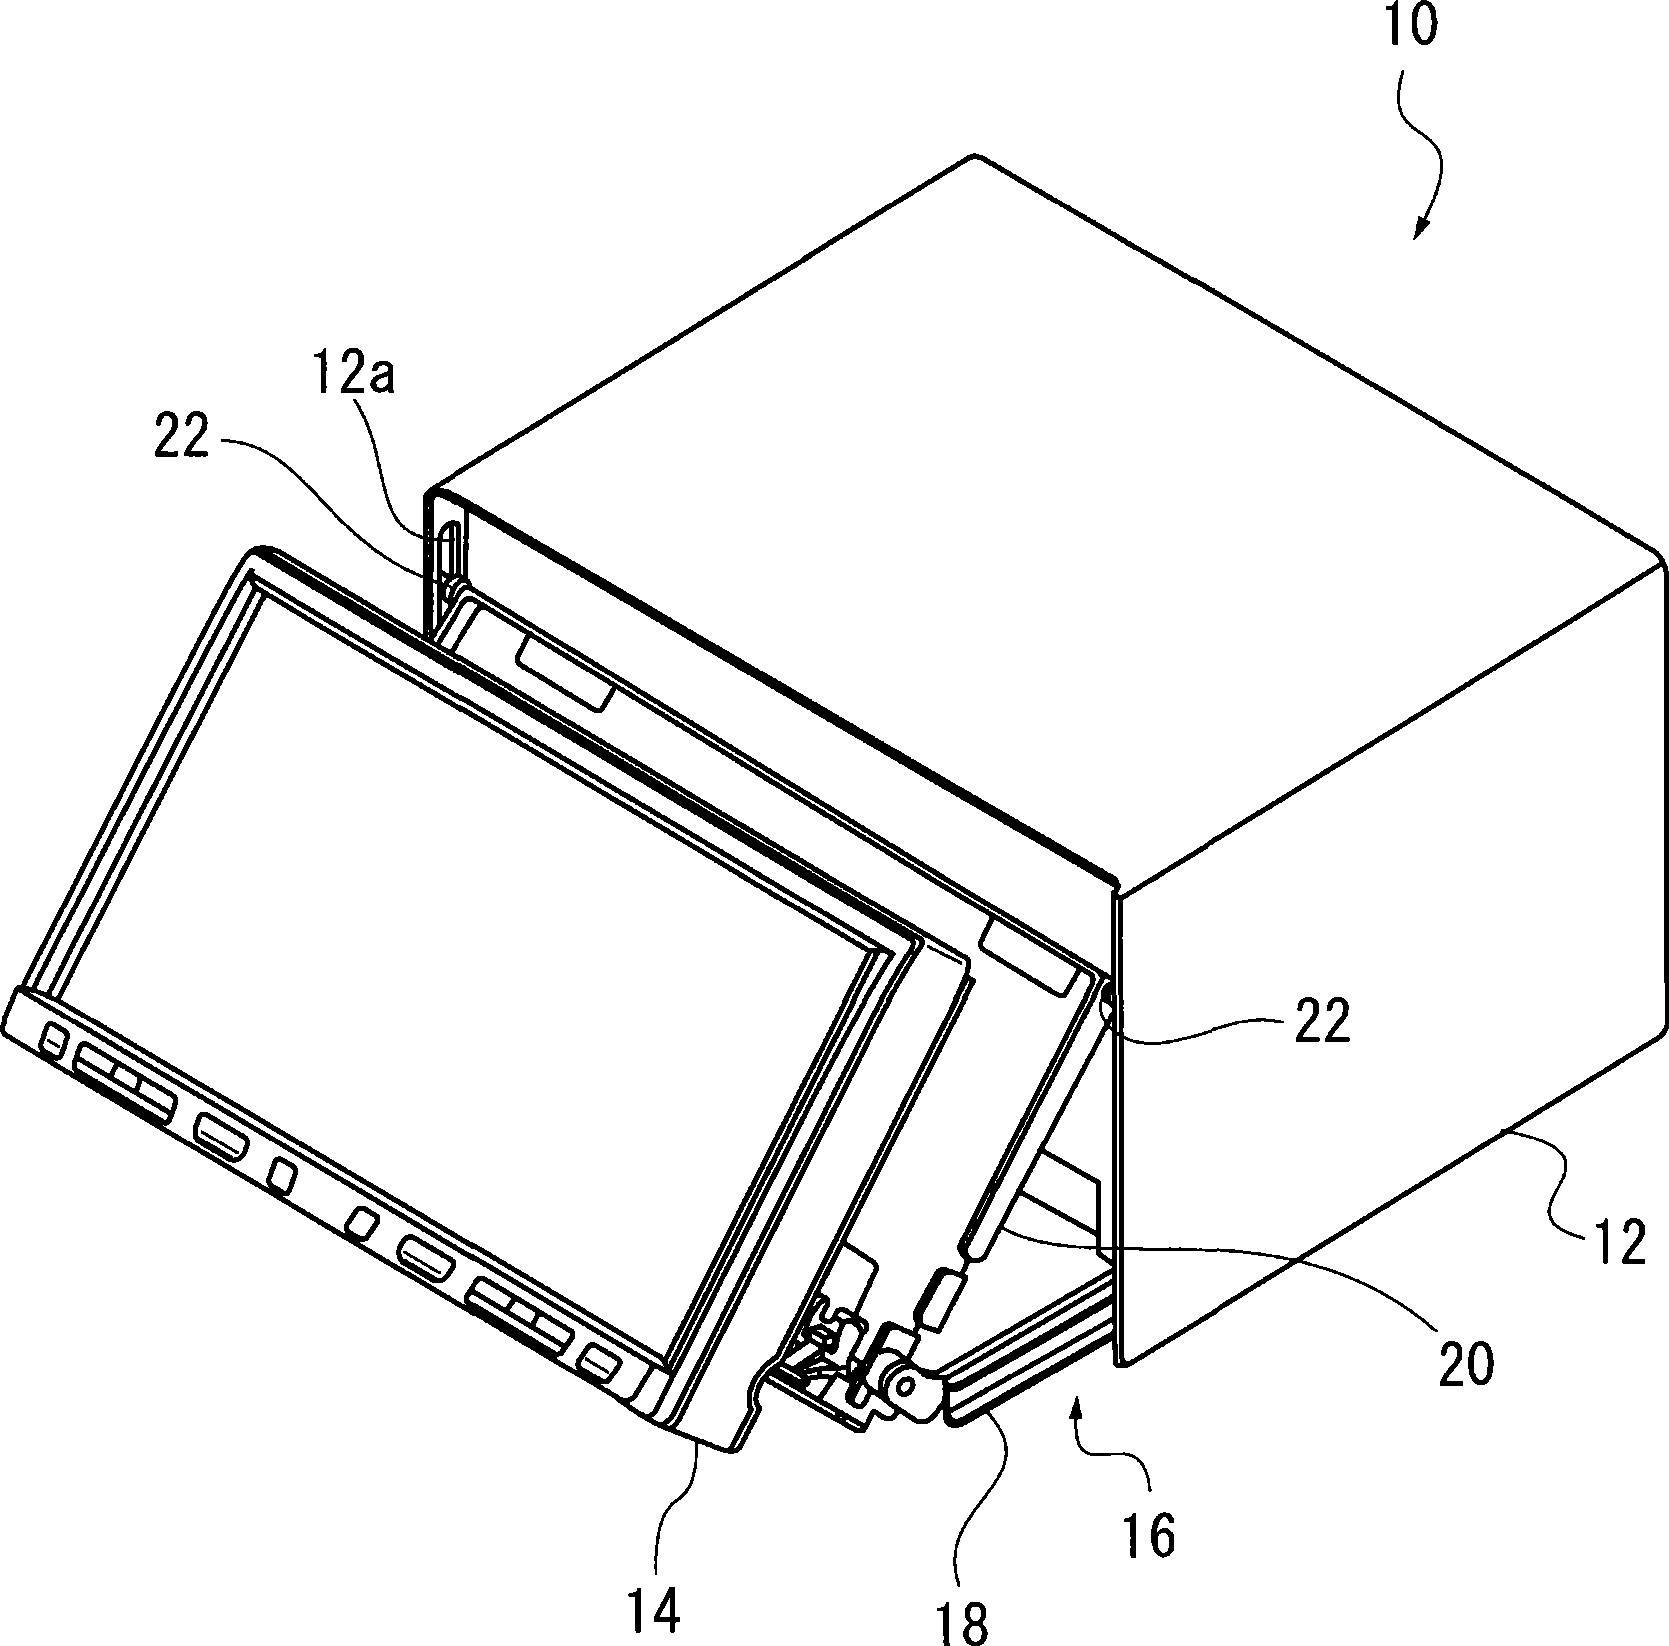 Panel detaching mechanism